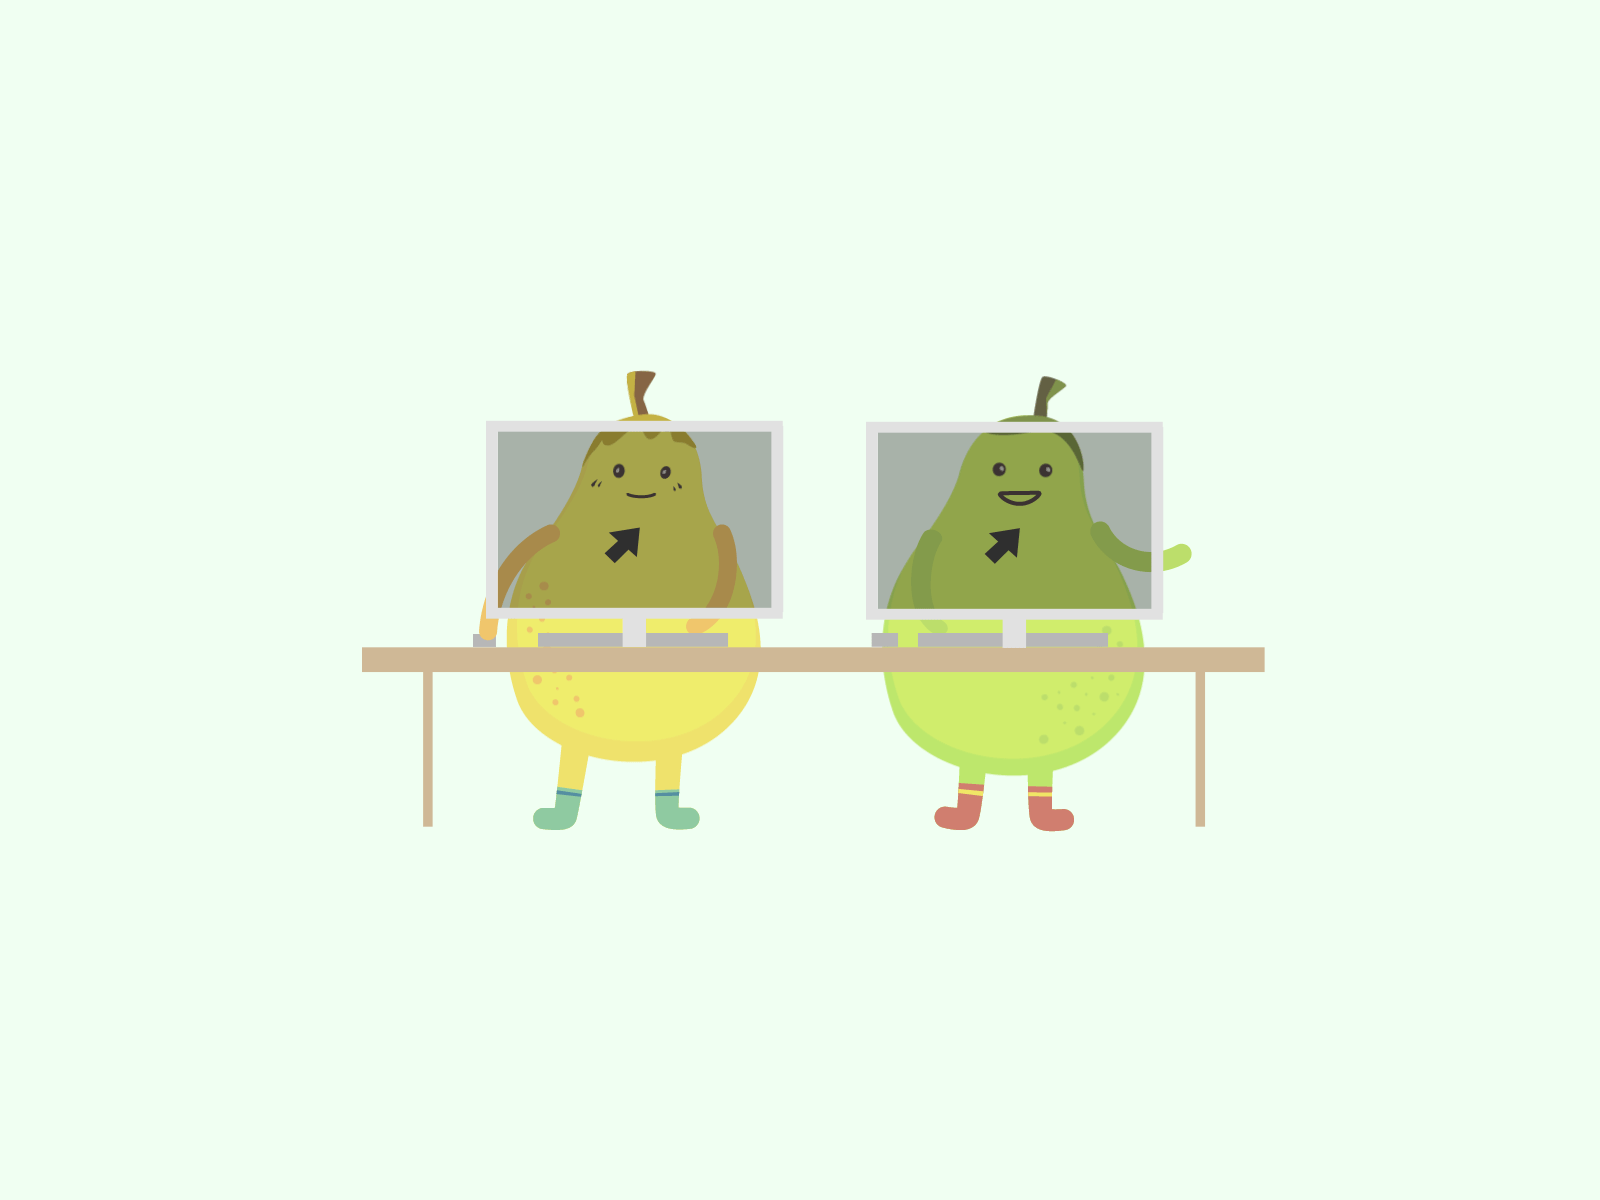 Pairing Pears pair programming gif animation illustration pivotal